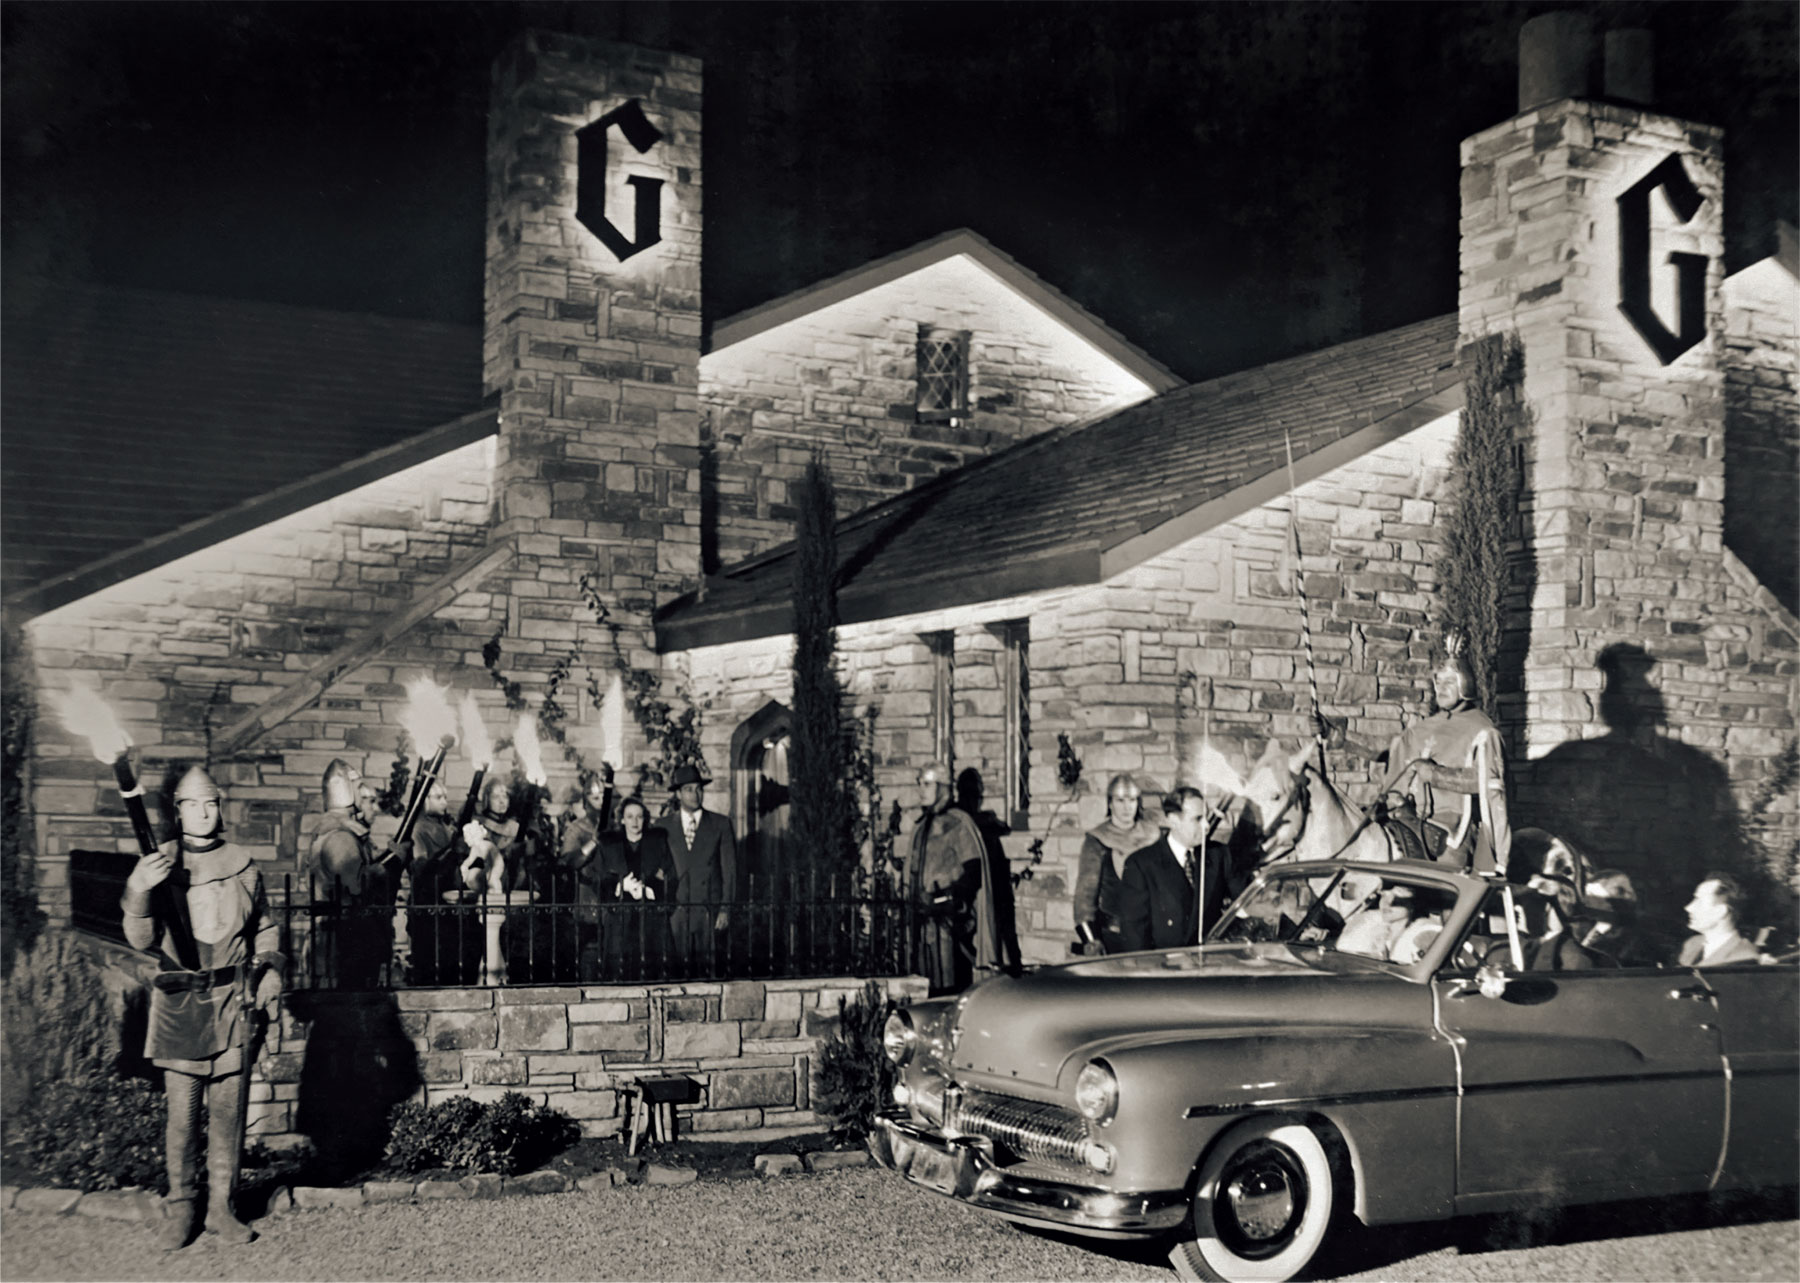 Entrance to Green Gables restaurant, 1949. All images courtesy of Dan Gosnell Jr.